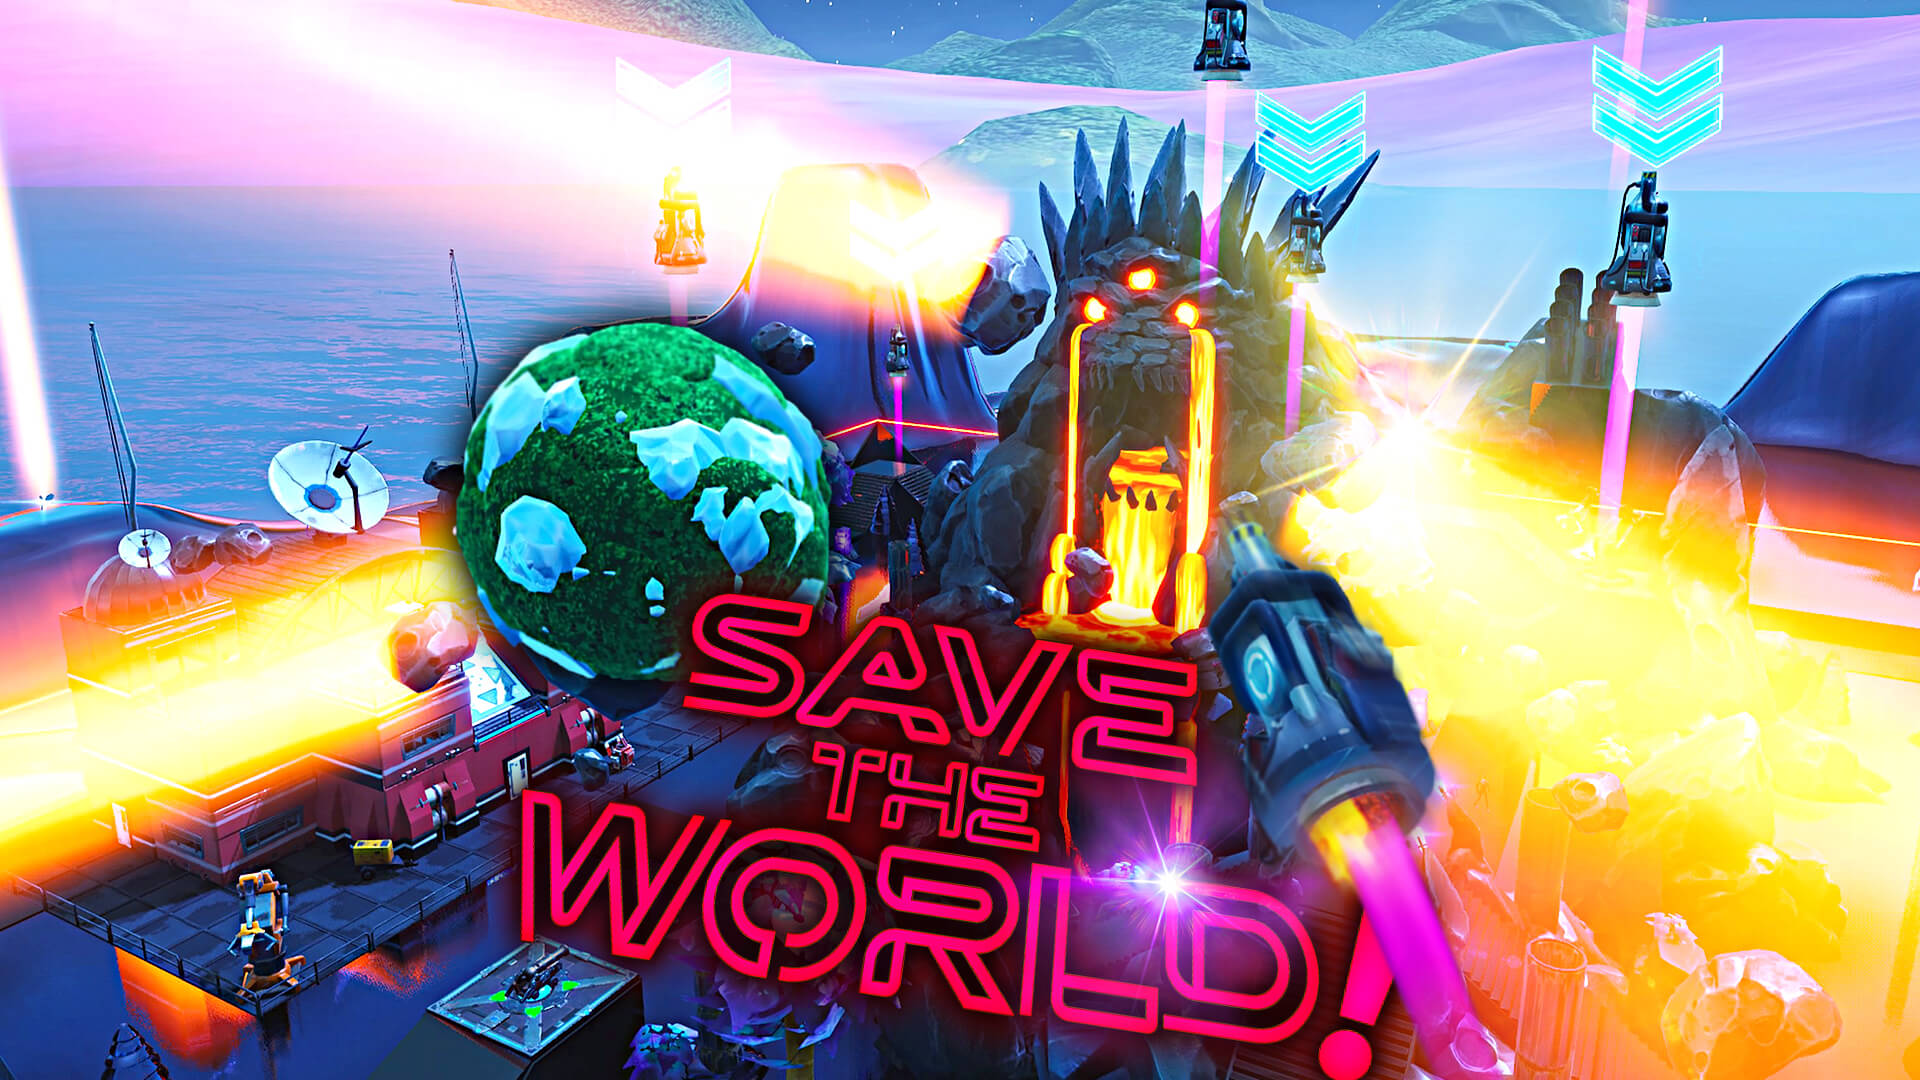 SAVE THE WORLD!